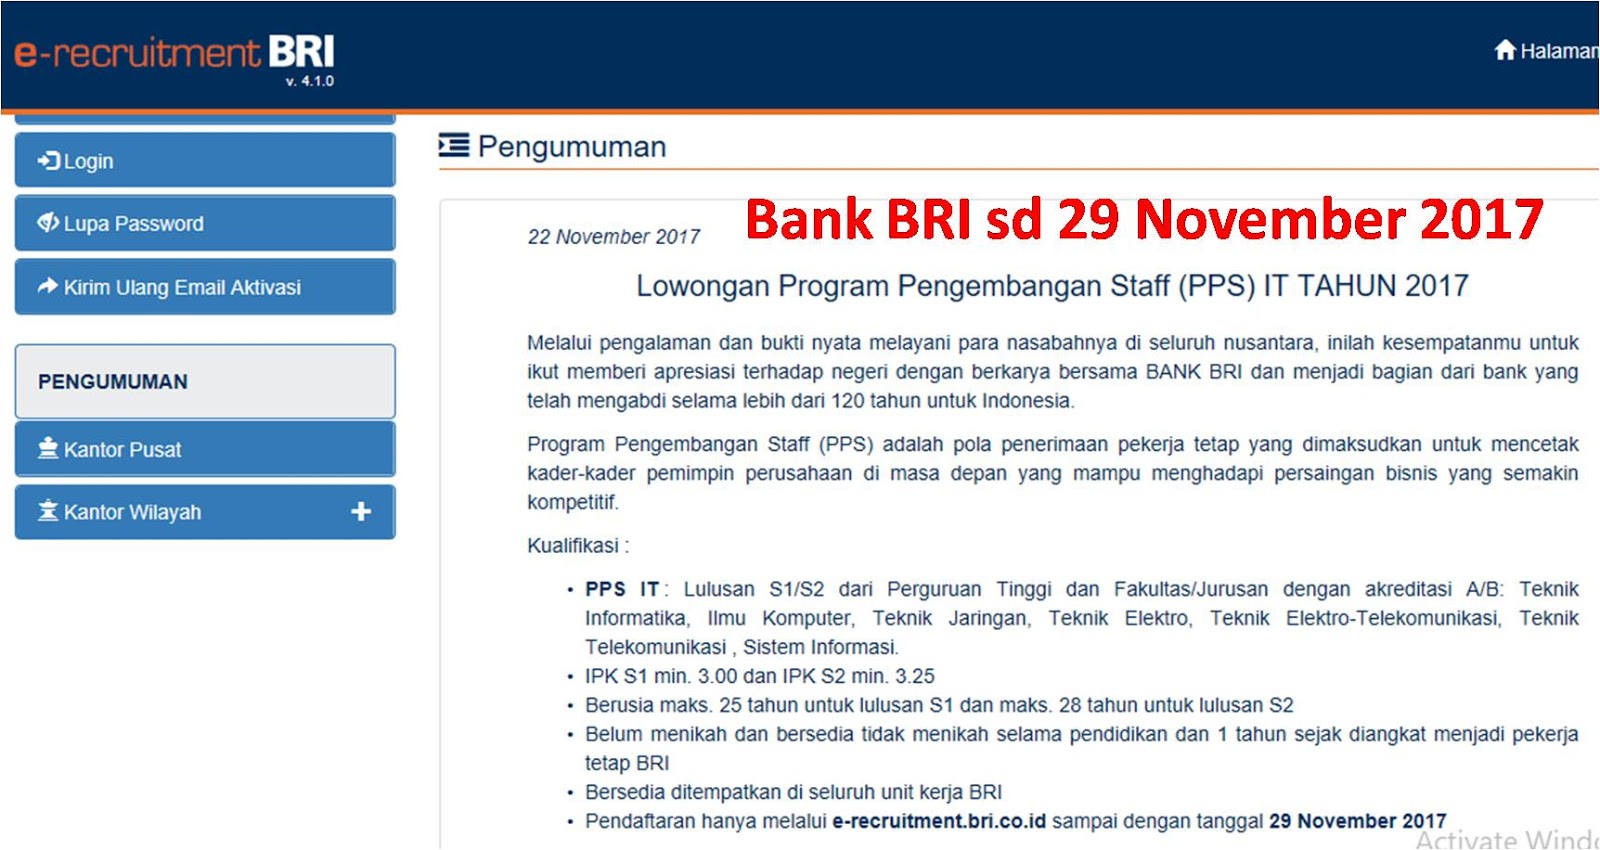 Bank BRI Program Pengembangan Staf sd 29 November 2017 